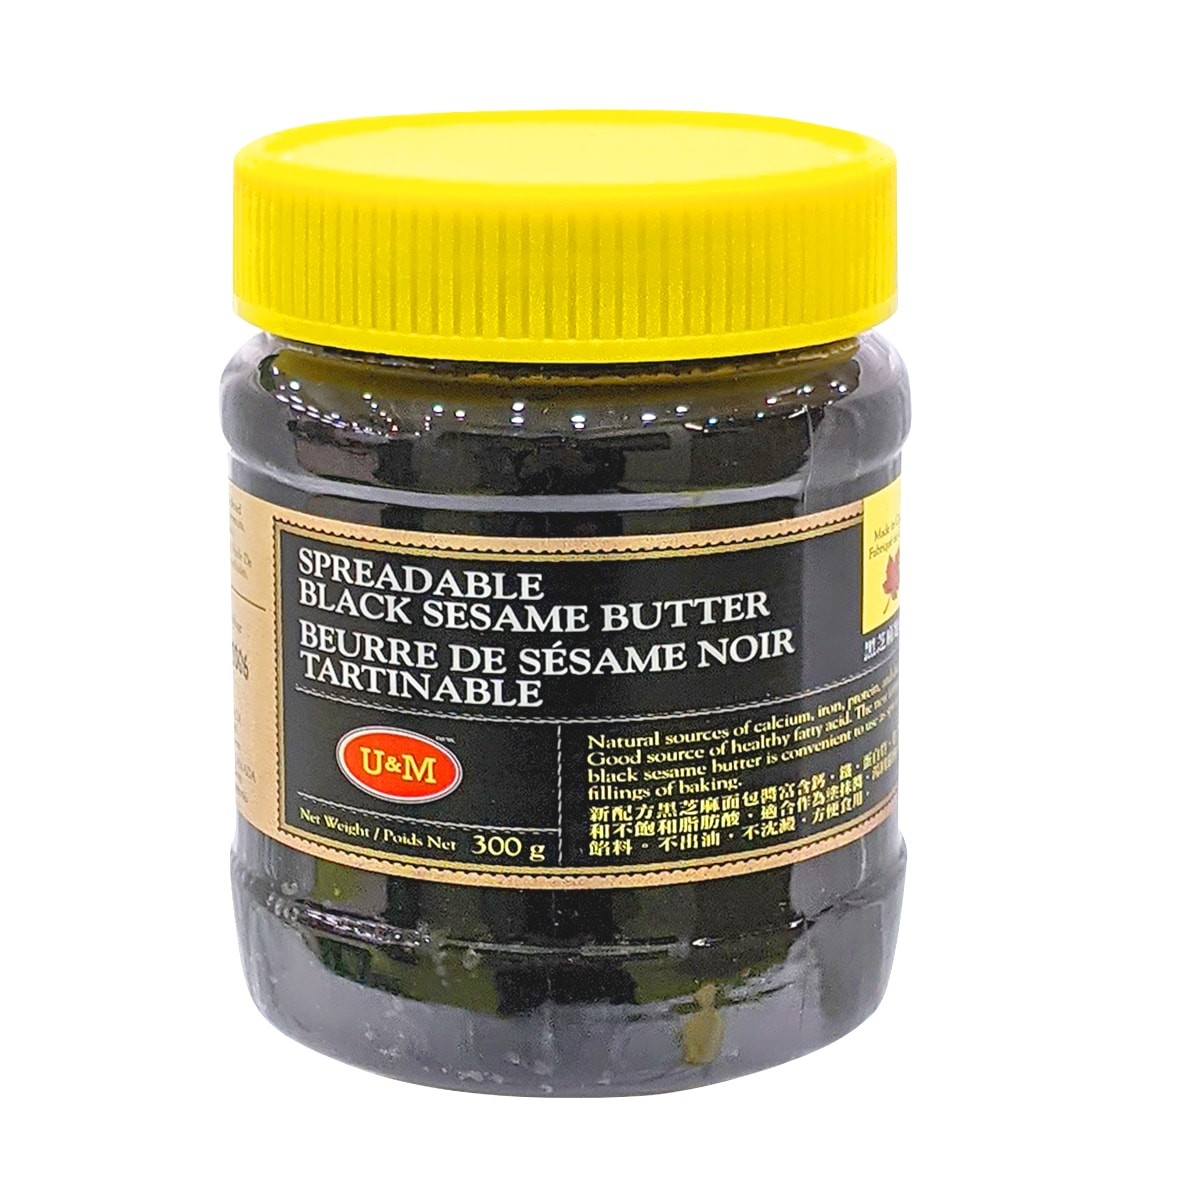 um-black-sesame-butter